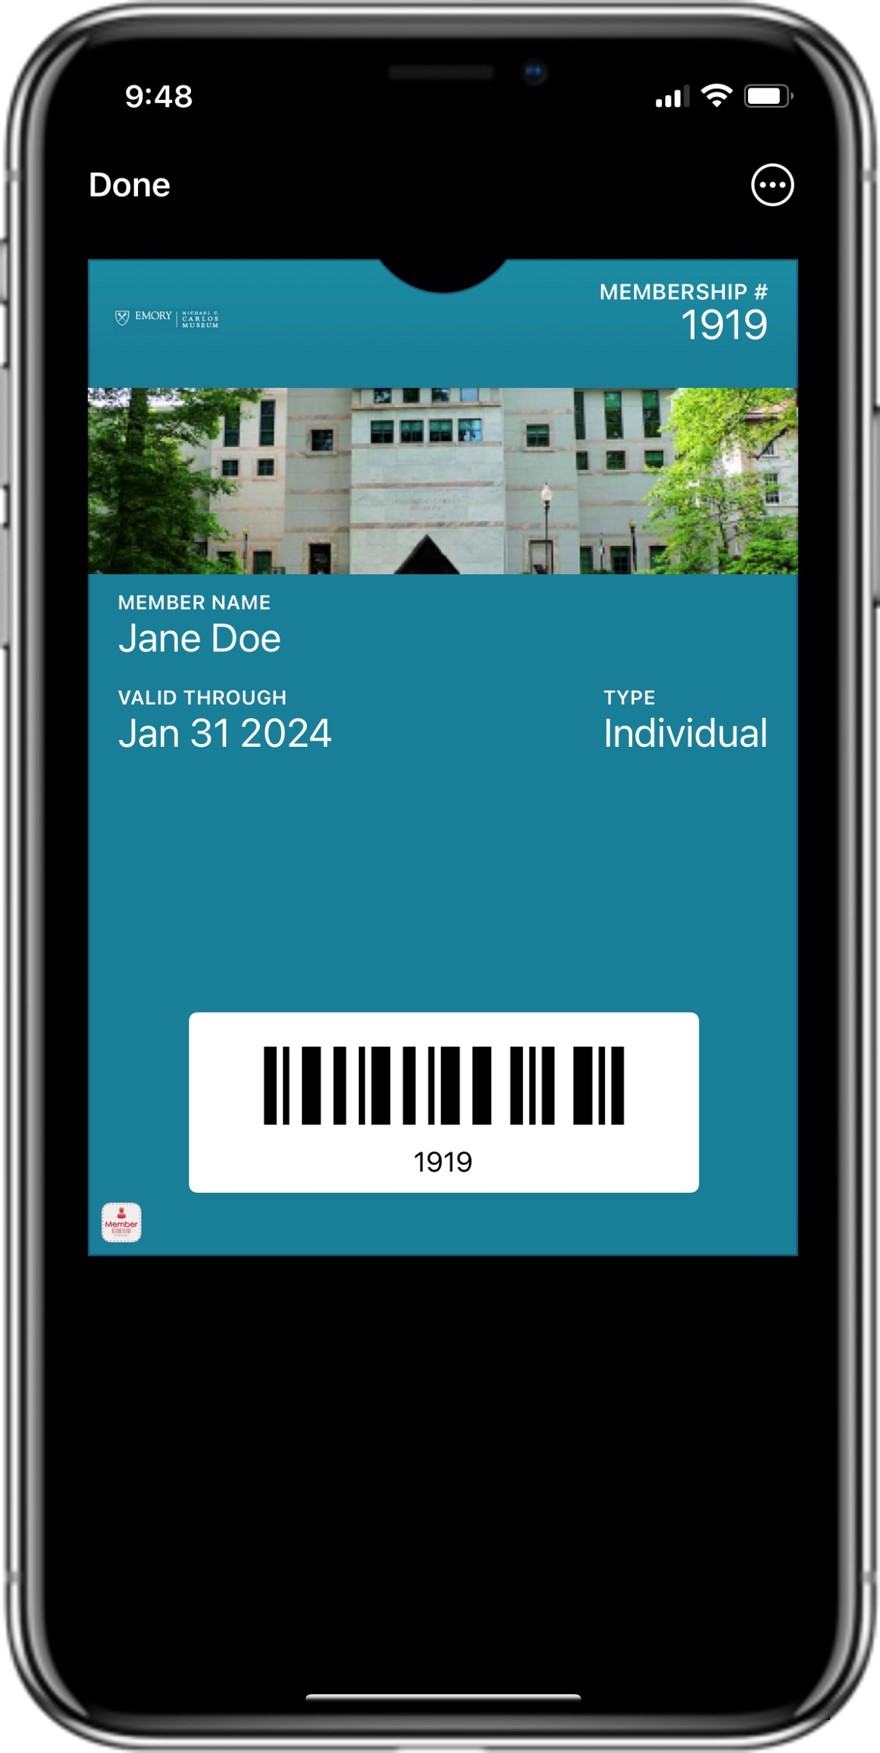 iPhone showing the new Carlos Museum digital membership card